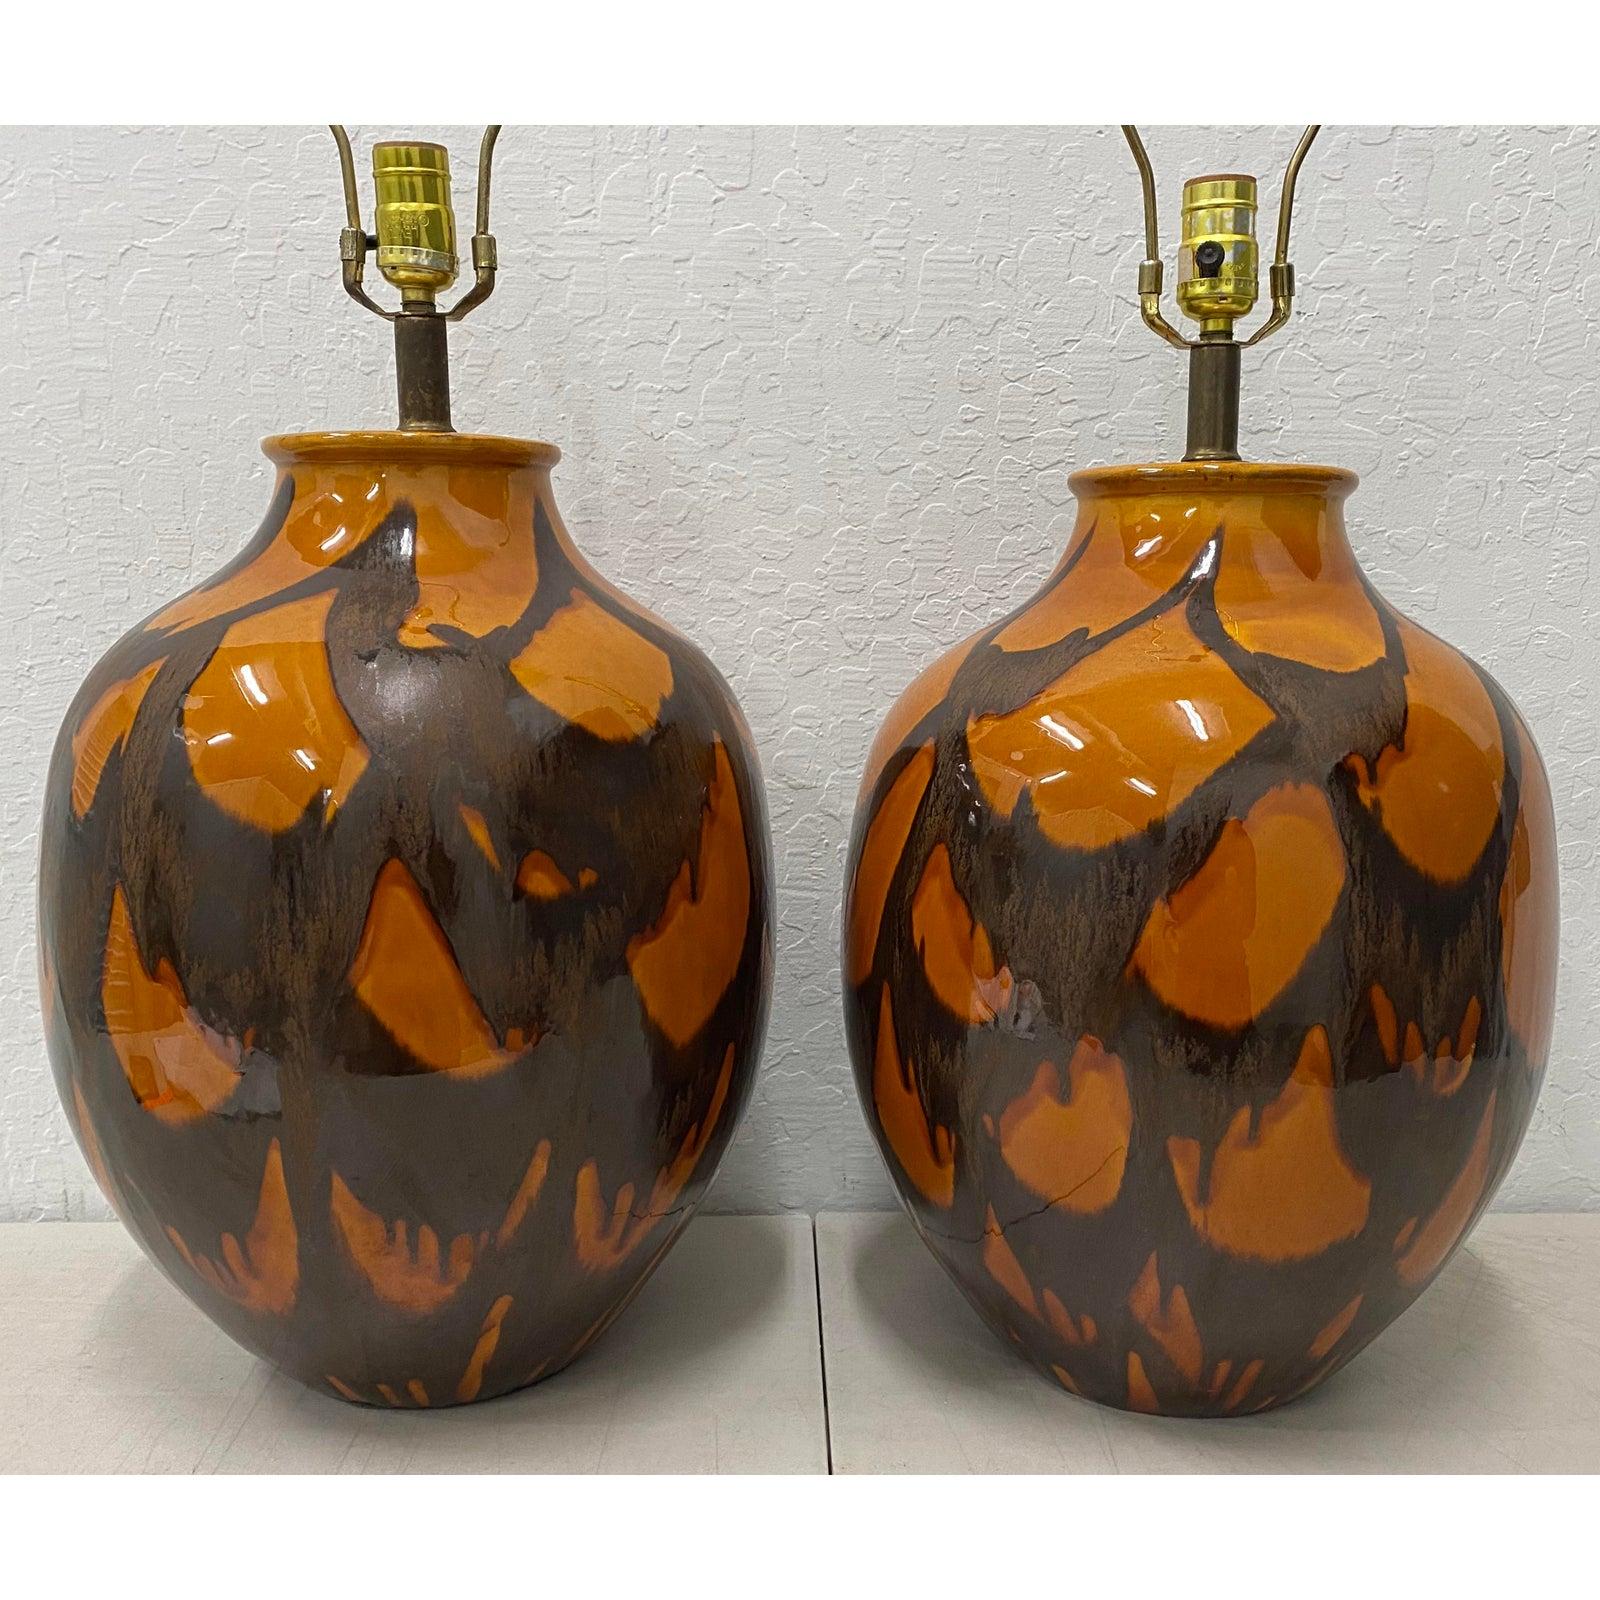 Pair of midcentury glazed ceramic lamps, circa 1970s

Orange and brown glazes - Large Bulbous shape

Measures: 13